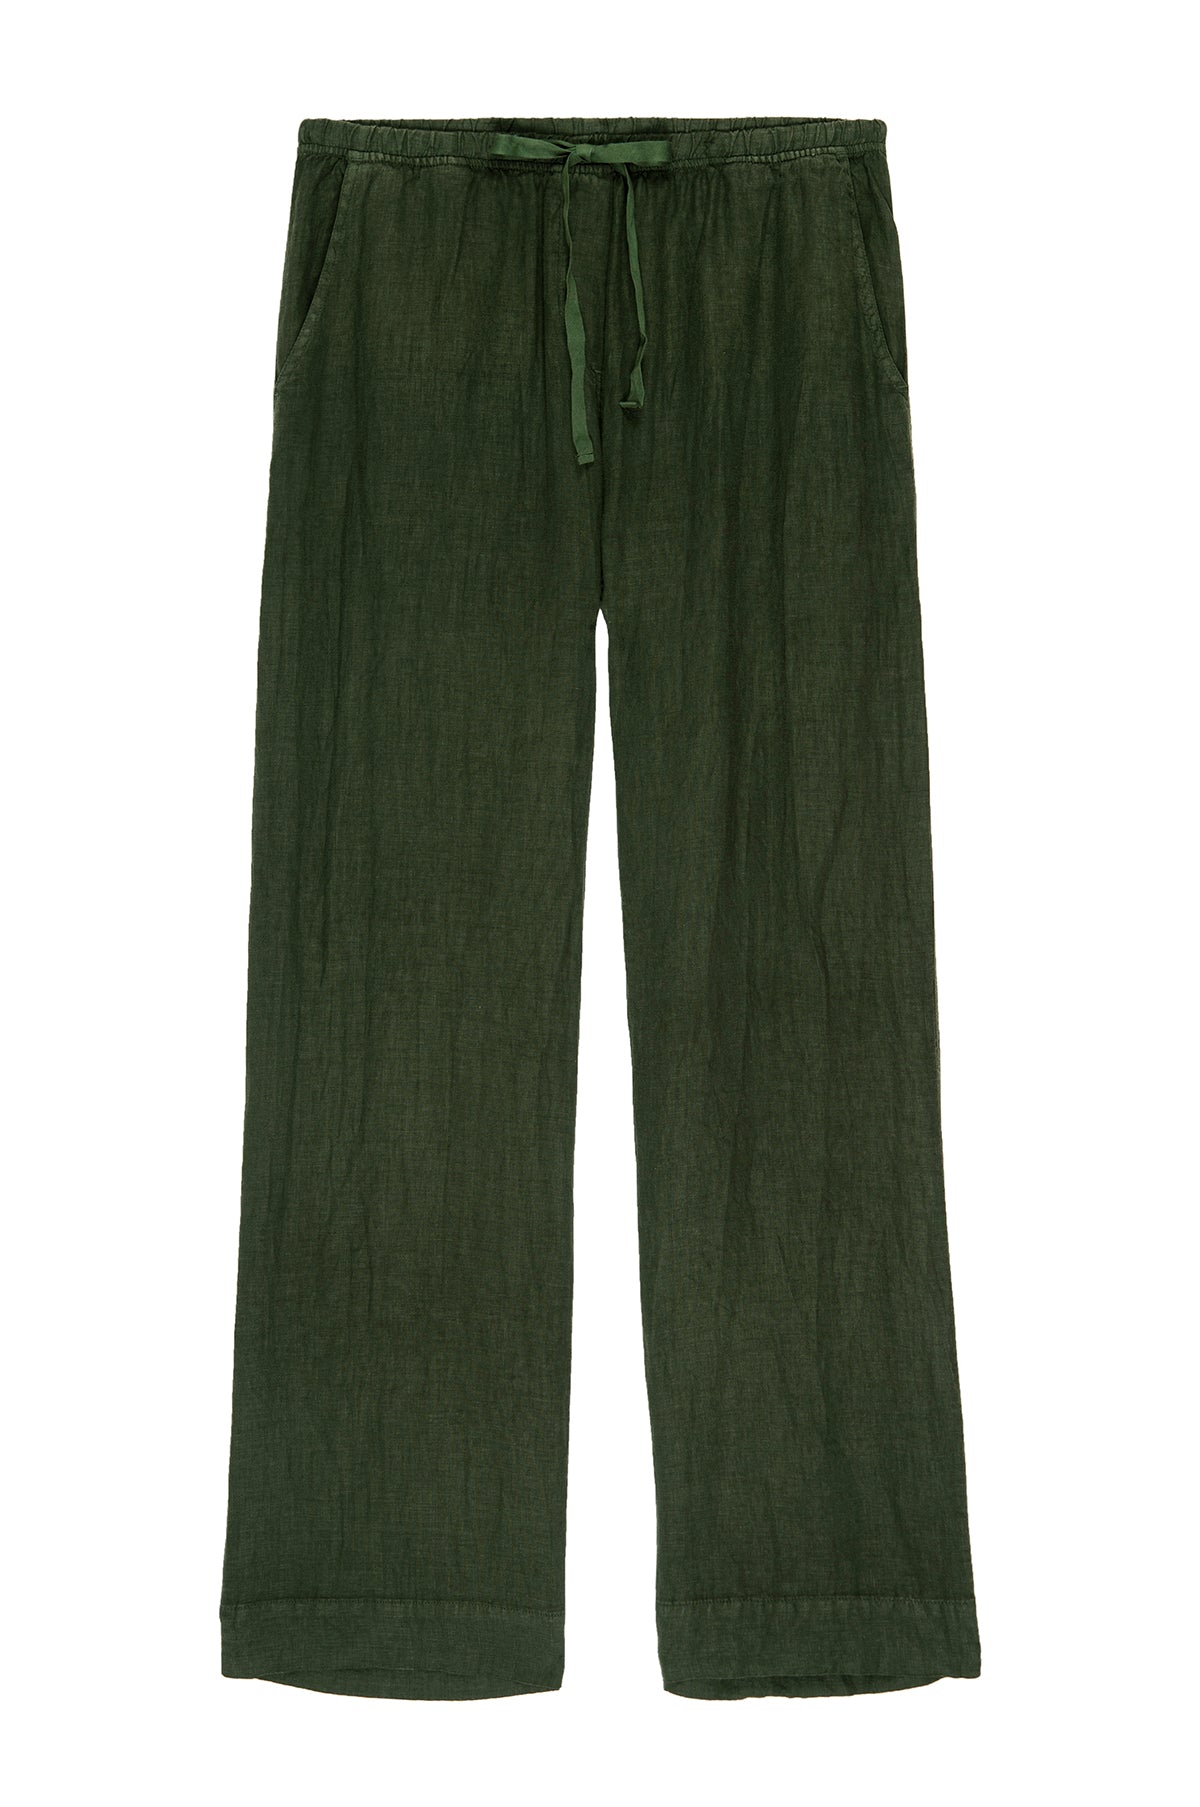   A women's green linen PICO PANT by Velvet by Jenny Graham. 